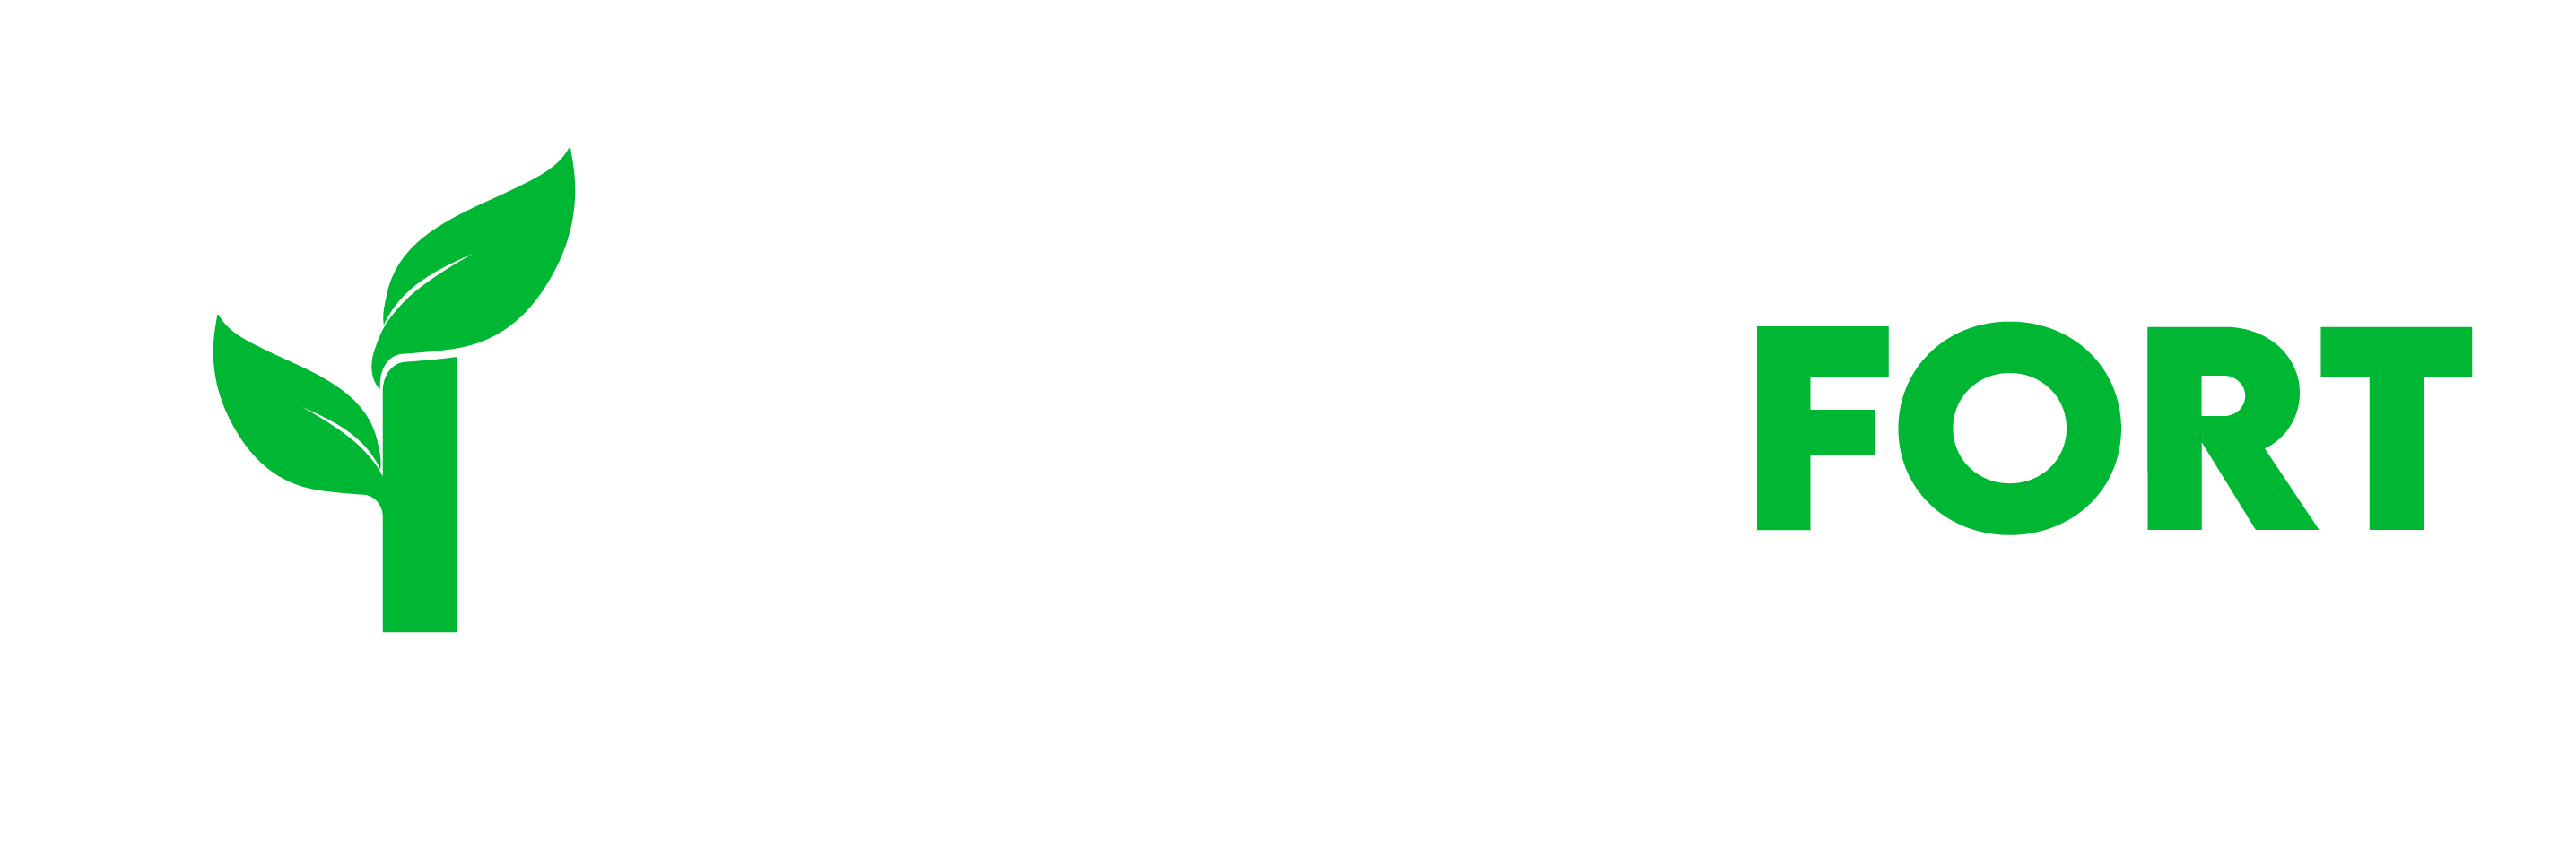 Irrigafort - Produtos Agrícolas